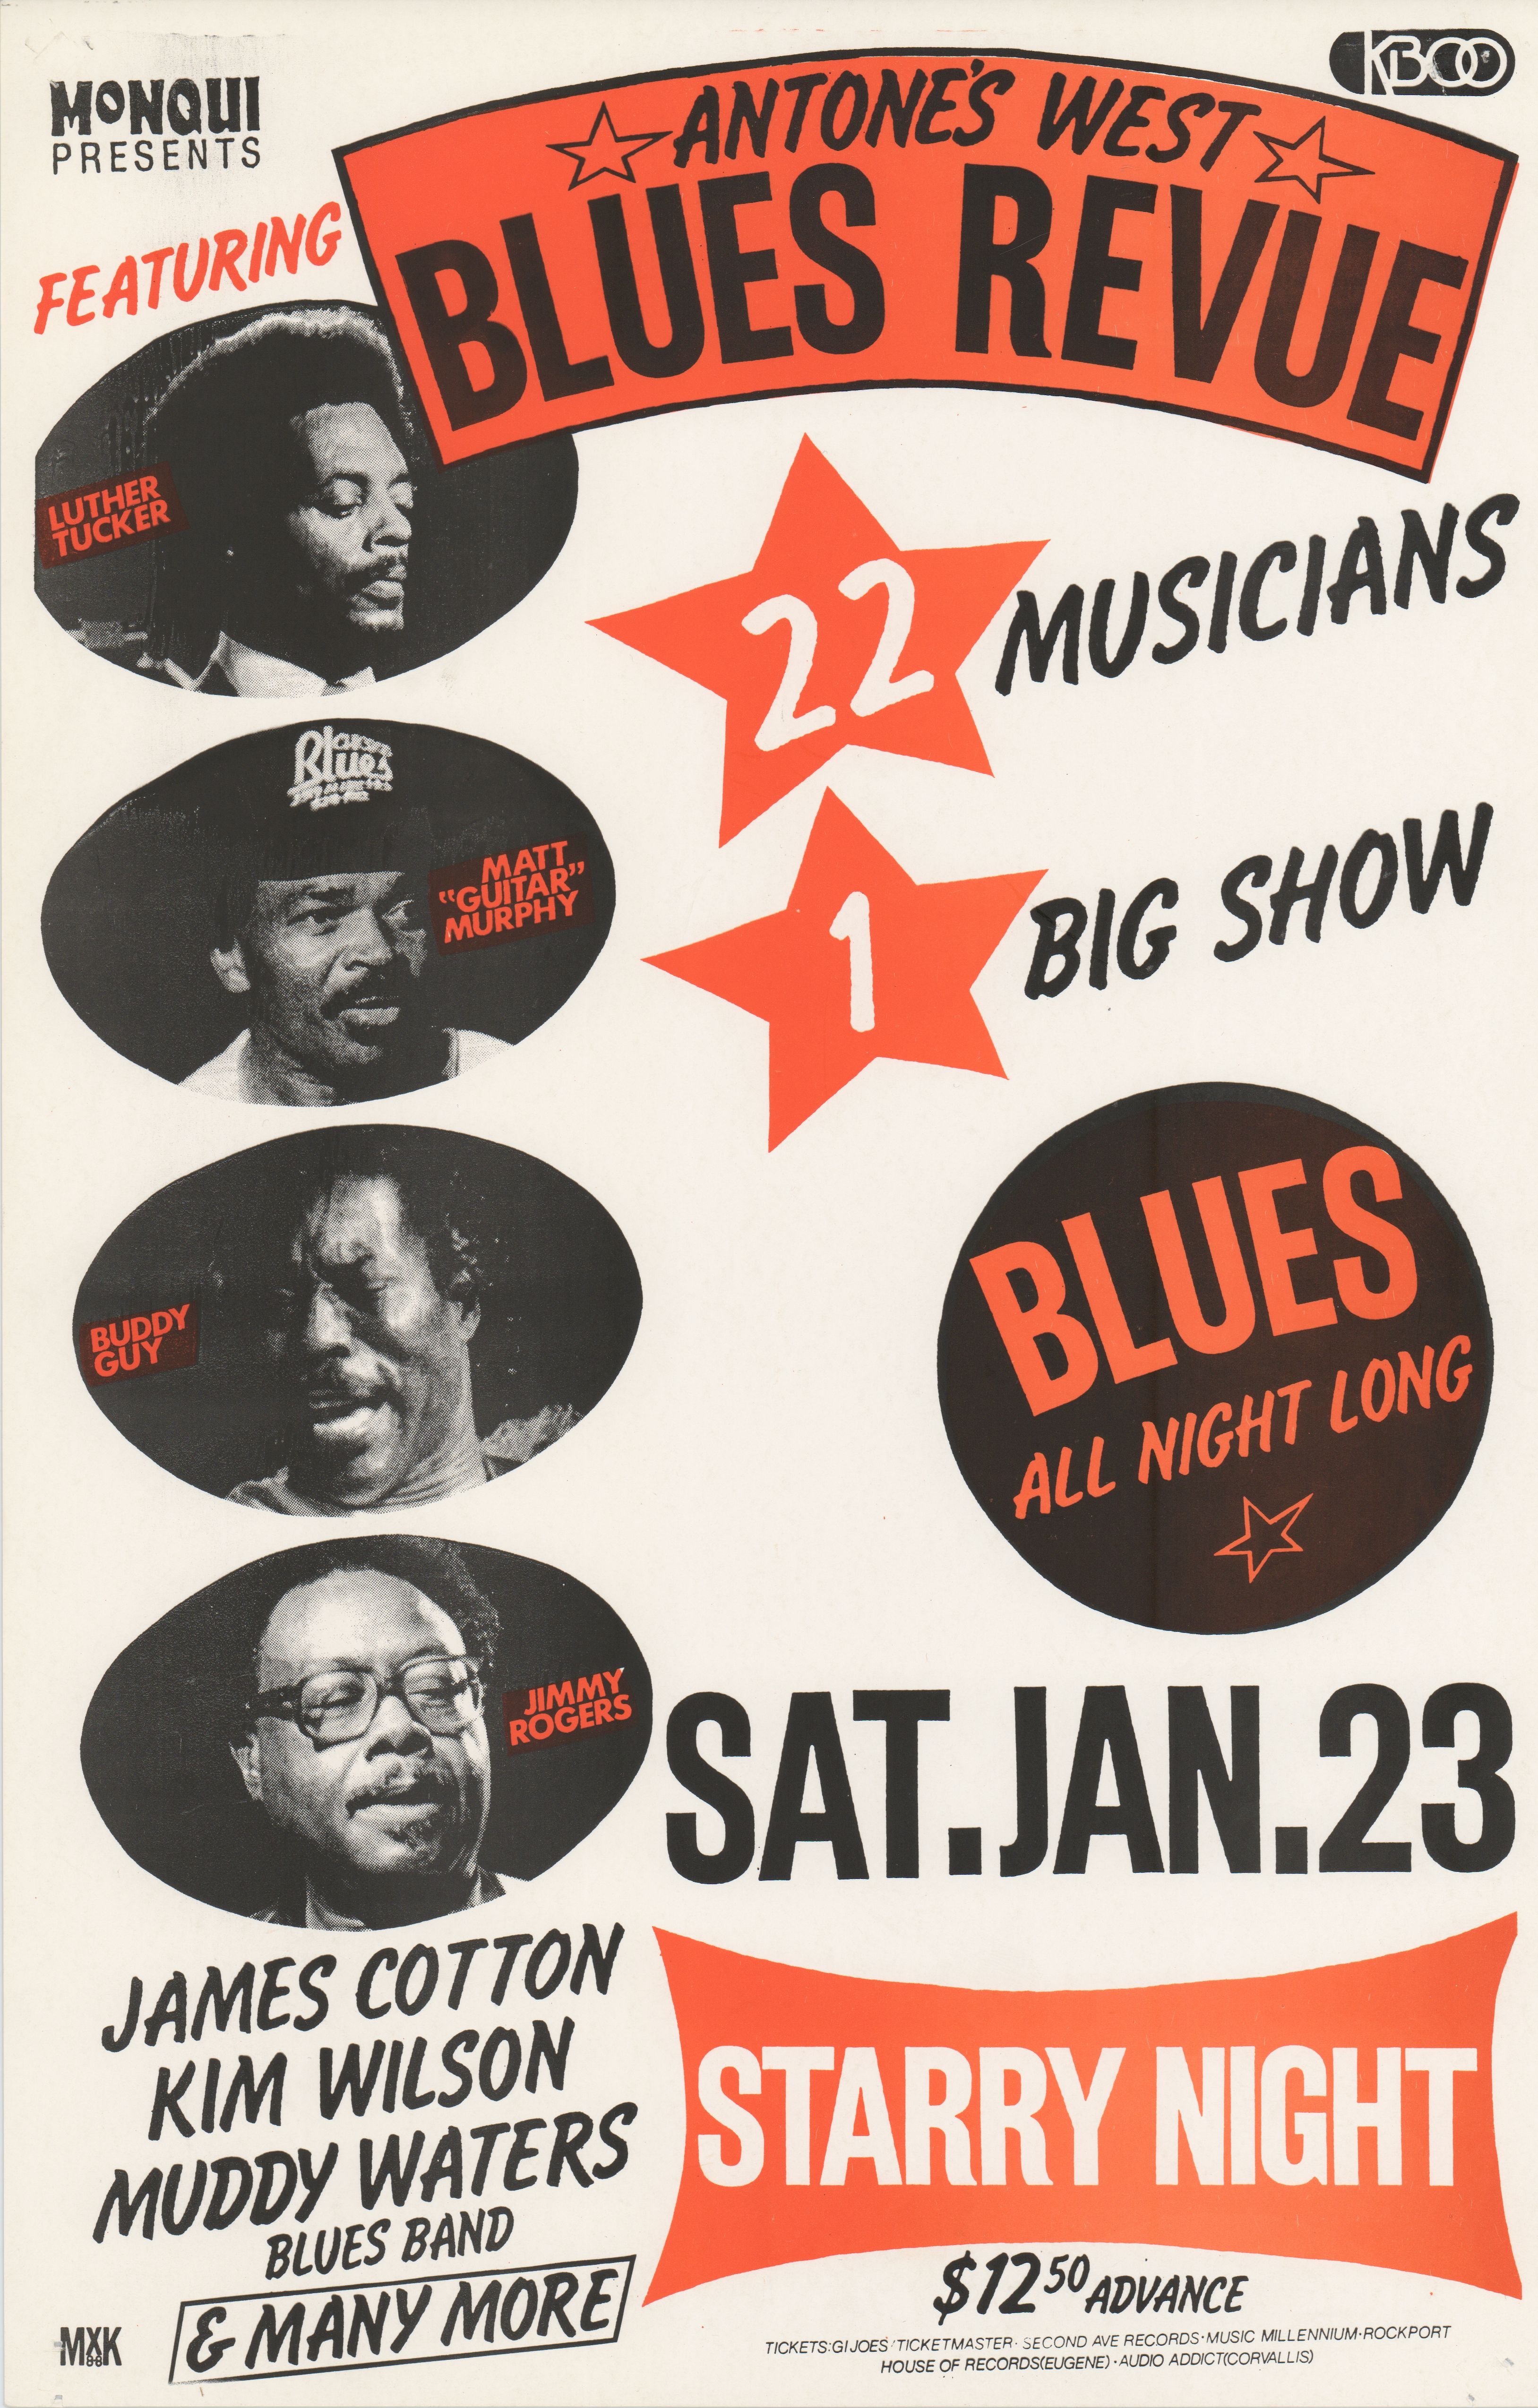 MXP-268.3 Antones West Blues Revue - Event 1988 Buddy Guy  Jan 23 Concert Poster